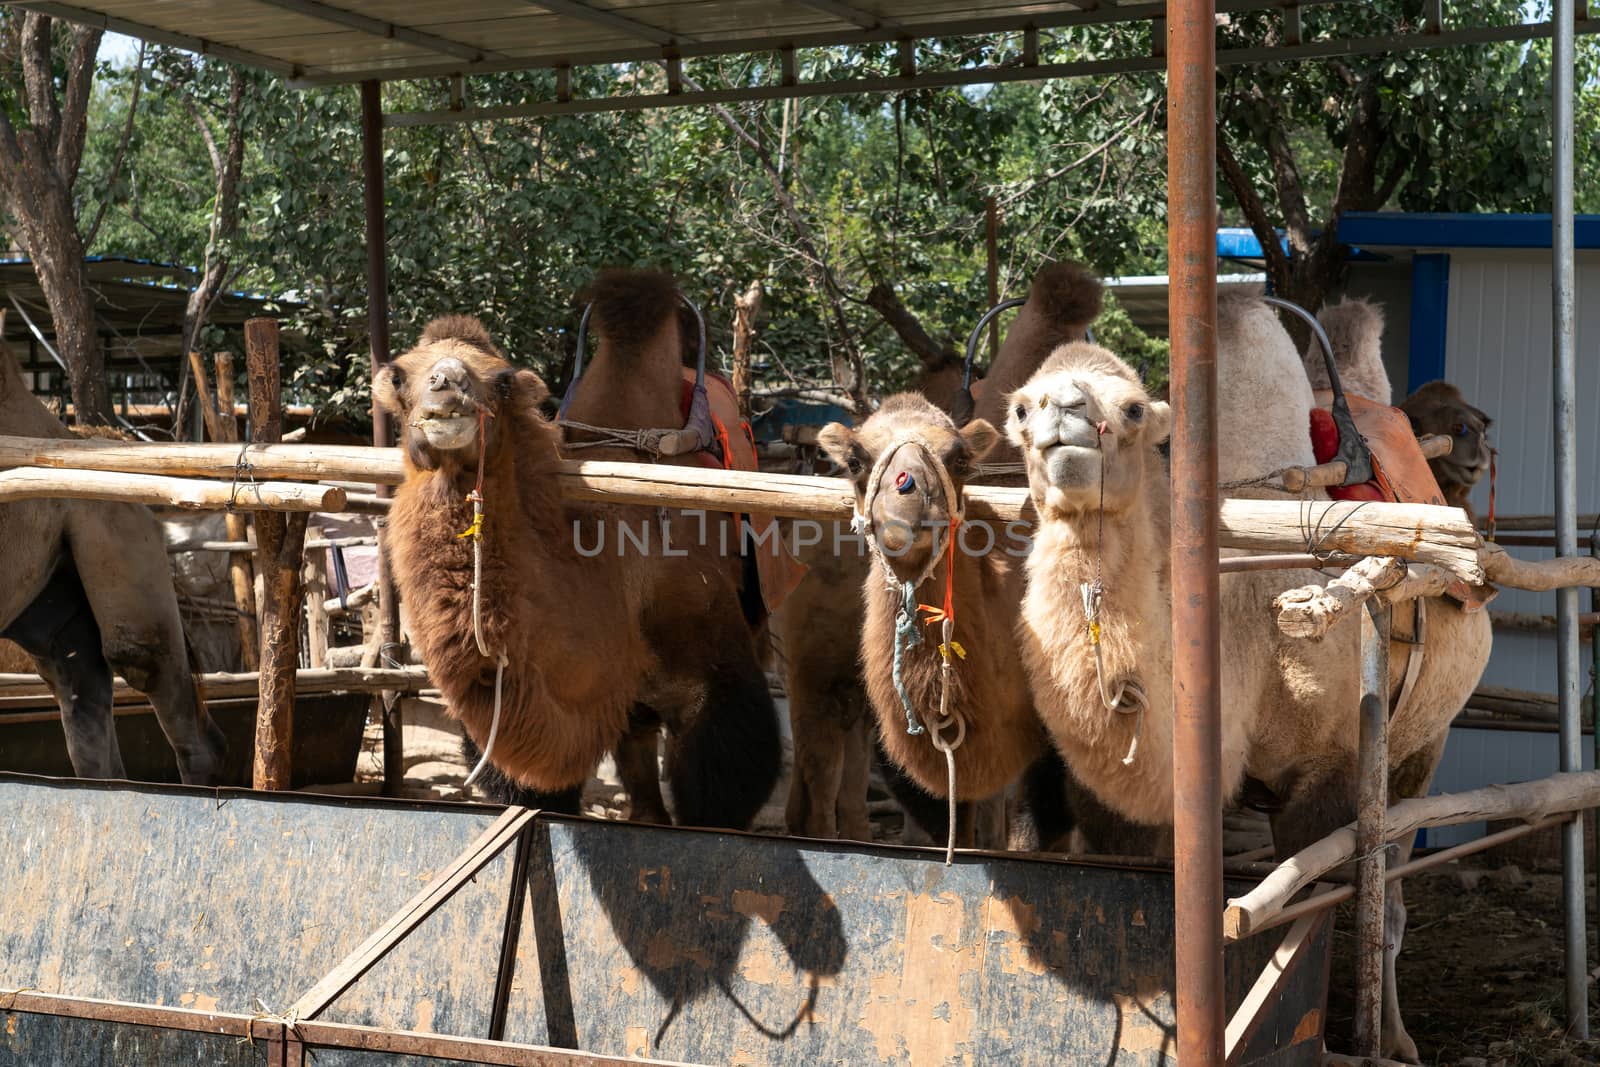 Camels farm, breeding shed in the rural farm. by vinkfan